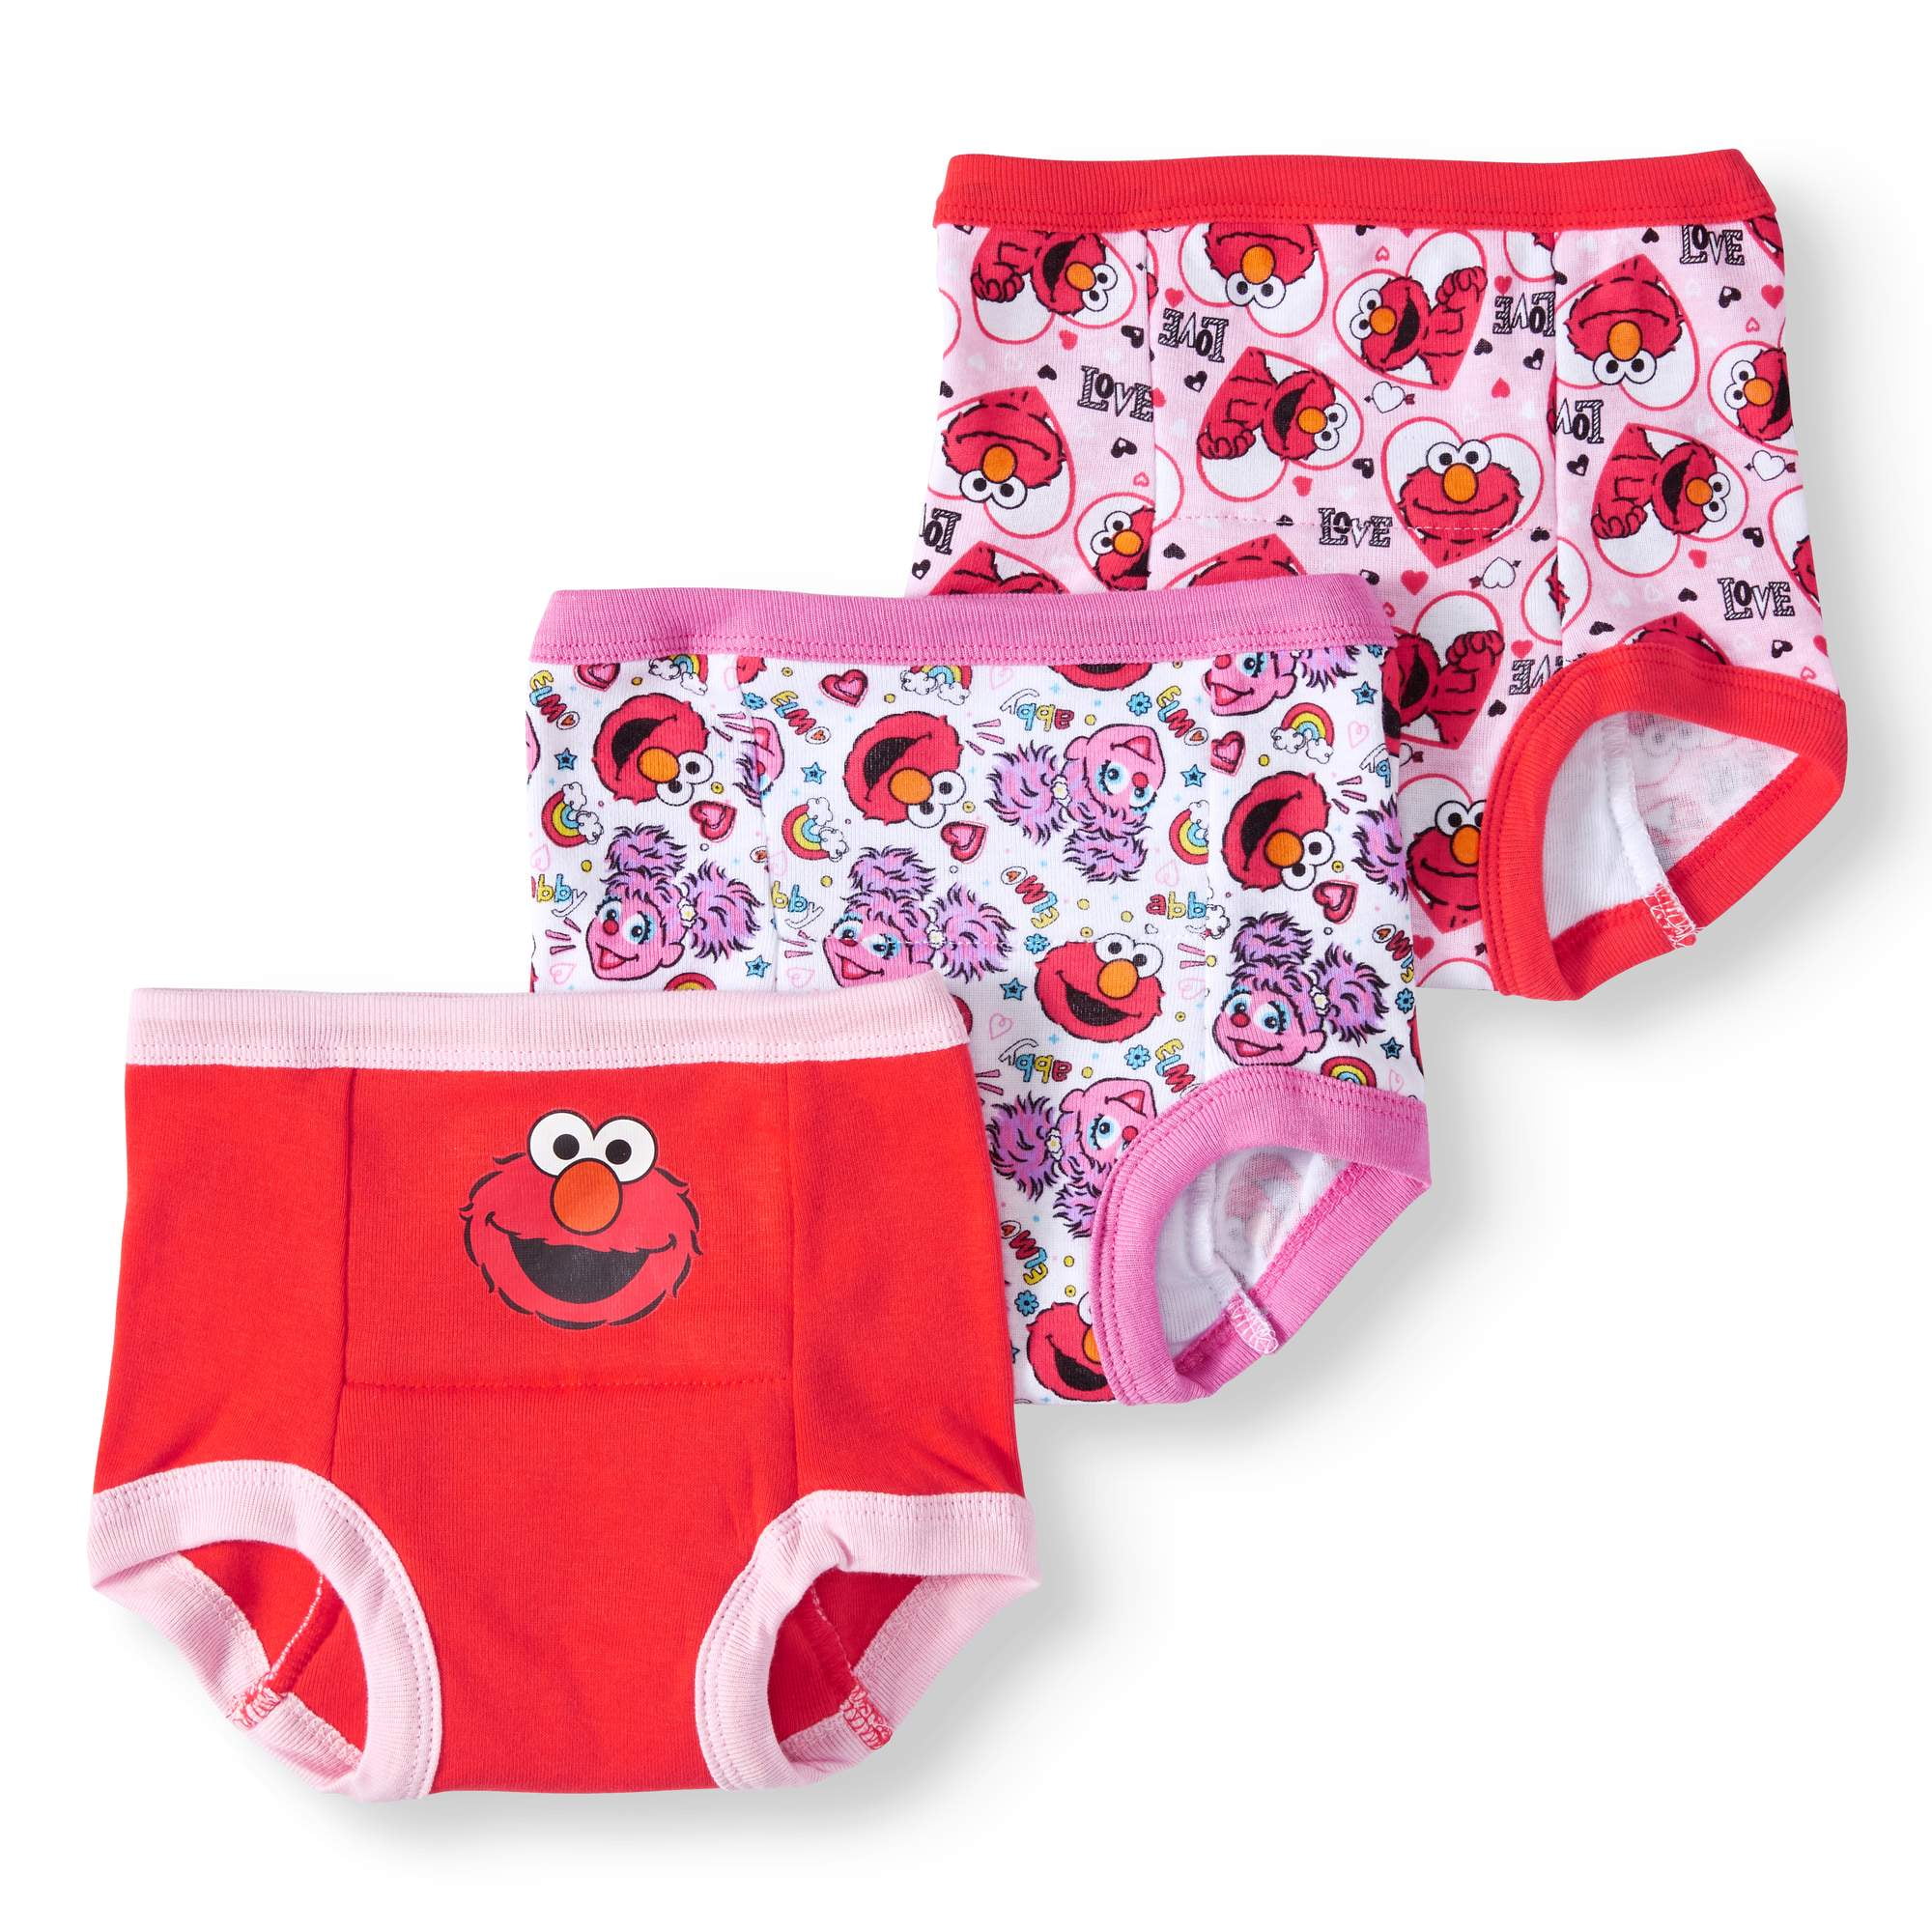 Sesame Street Unisex Toddler Potty Training Pants Jordan